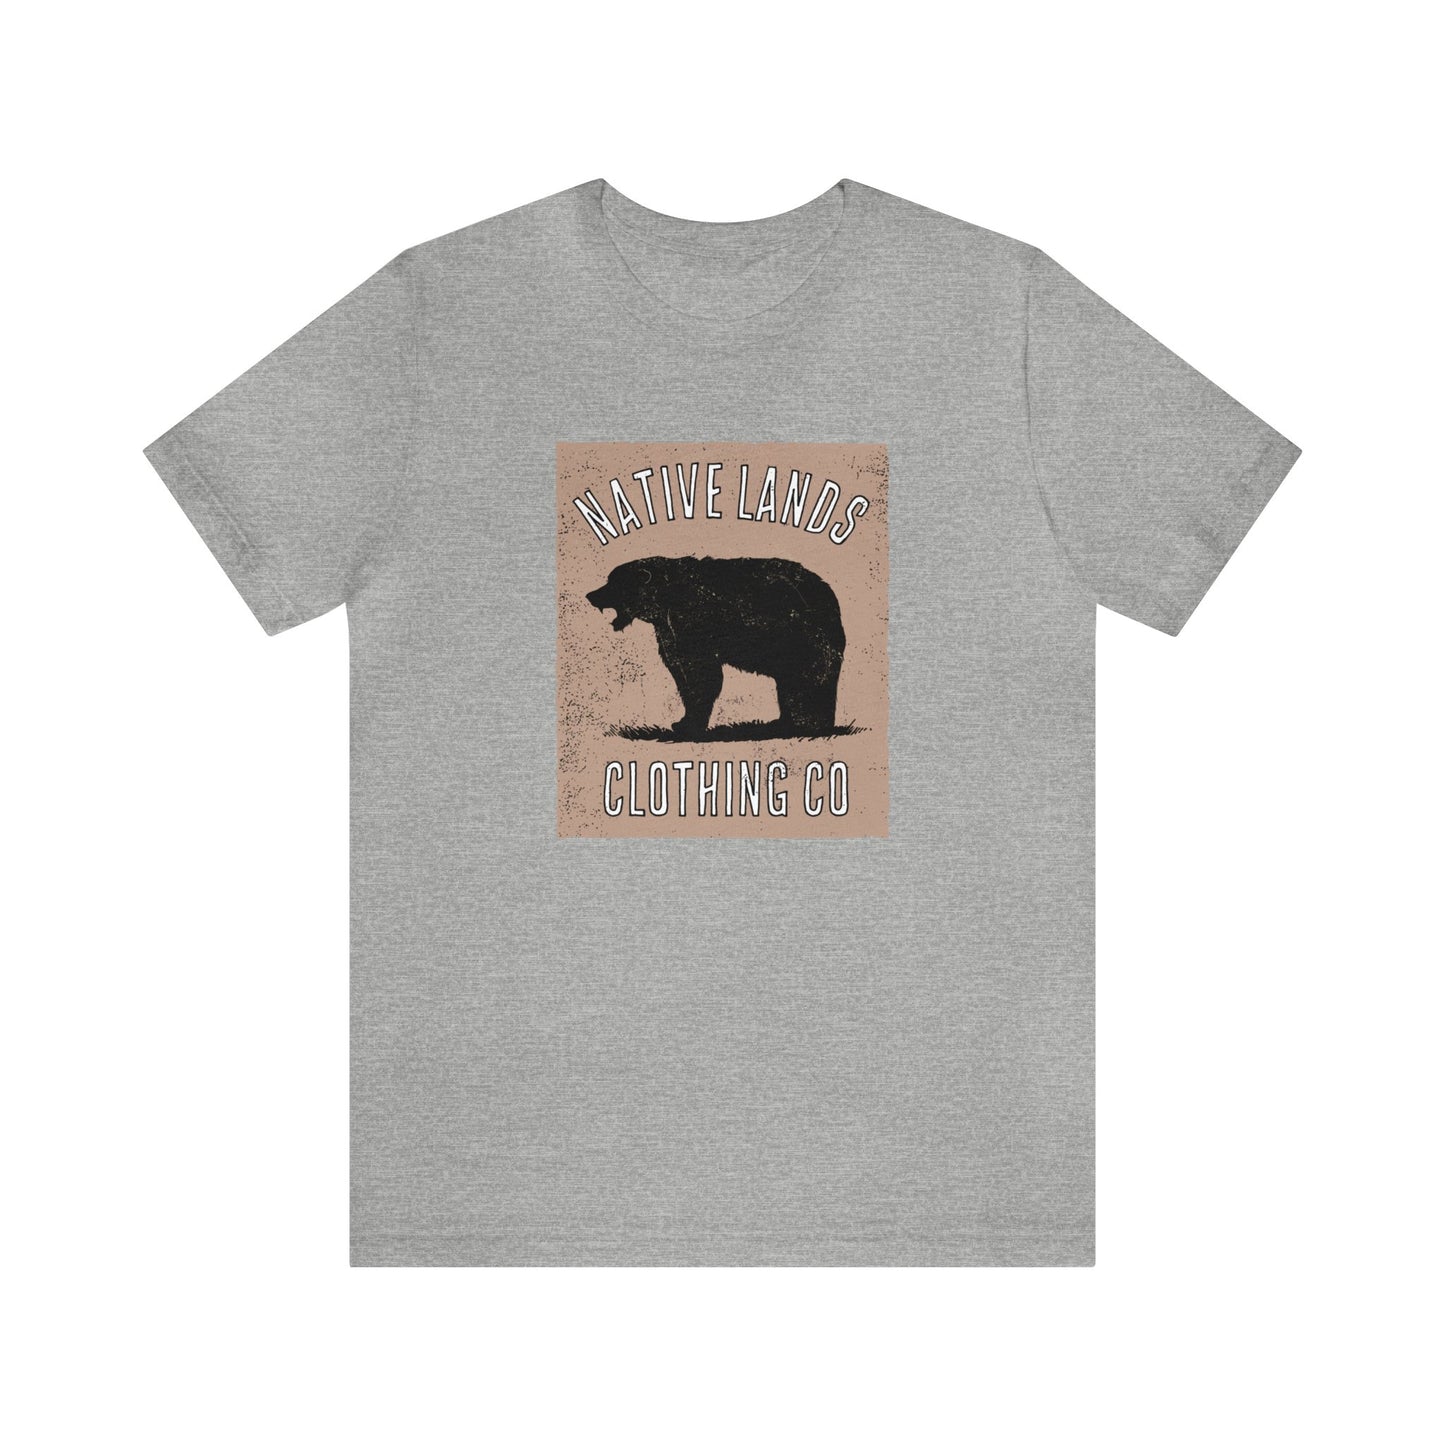 Camisa Bear Roaring Tan Algodón Nativo Americano